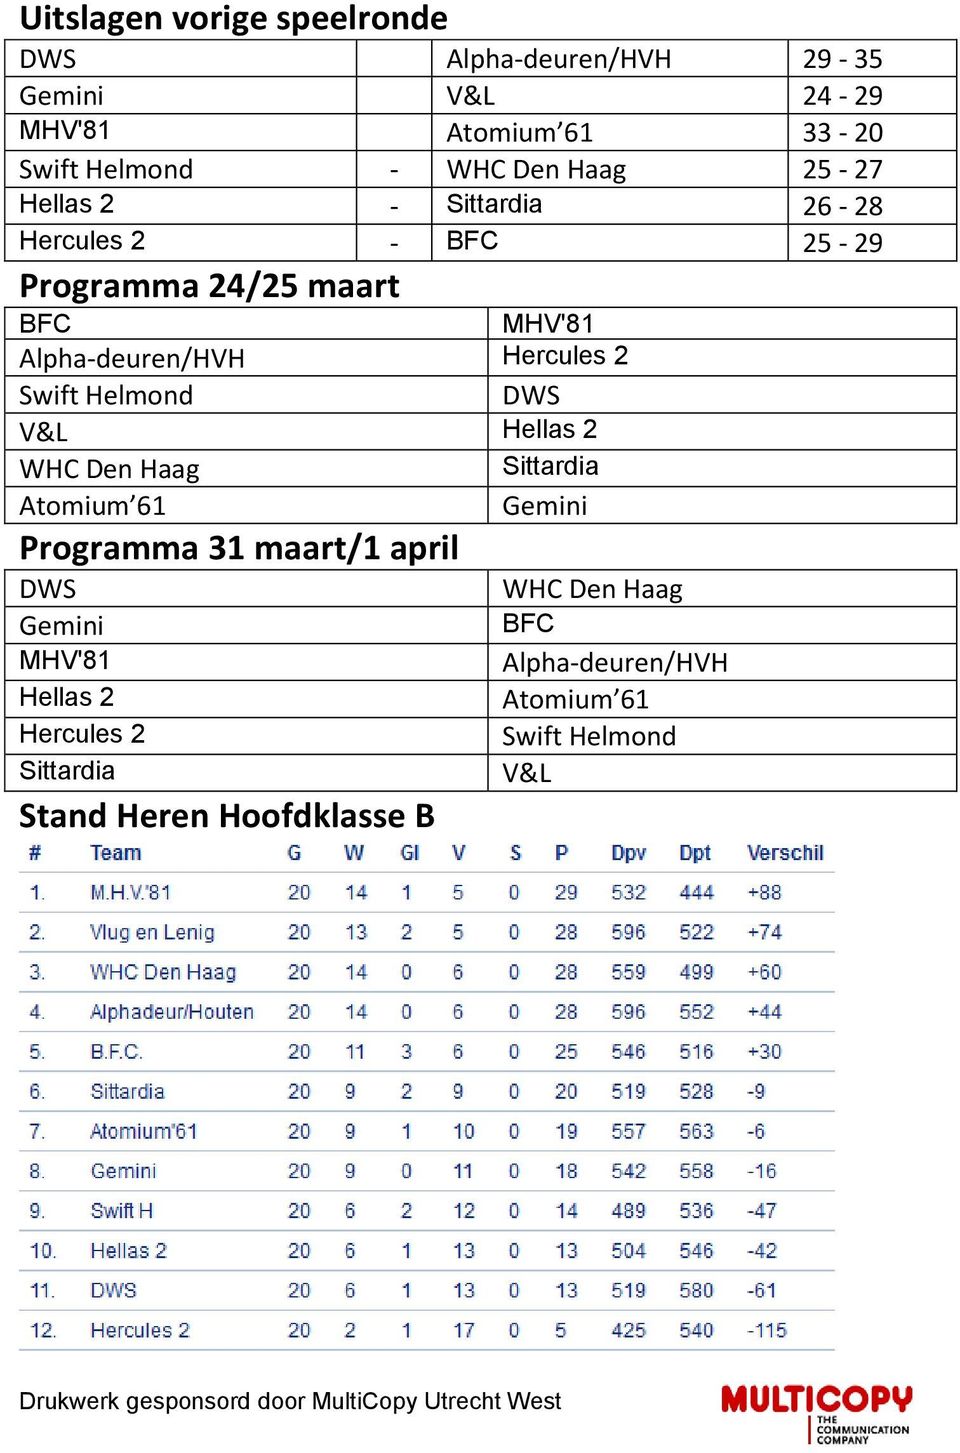 2 Swift Helmond DWS V&L Hellas 2 WHC Den Haag Sittardia Atomium 61 Gemini Programma 31 maart/1 april DWS Gemini MHV'81